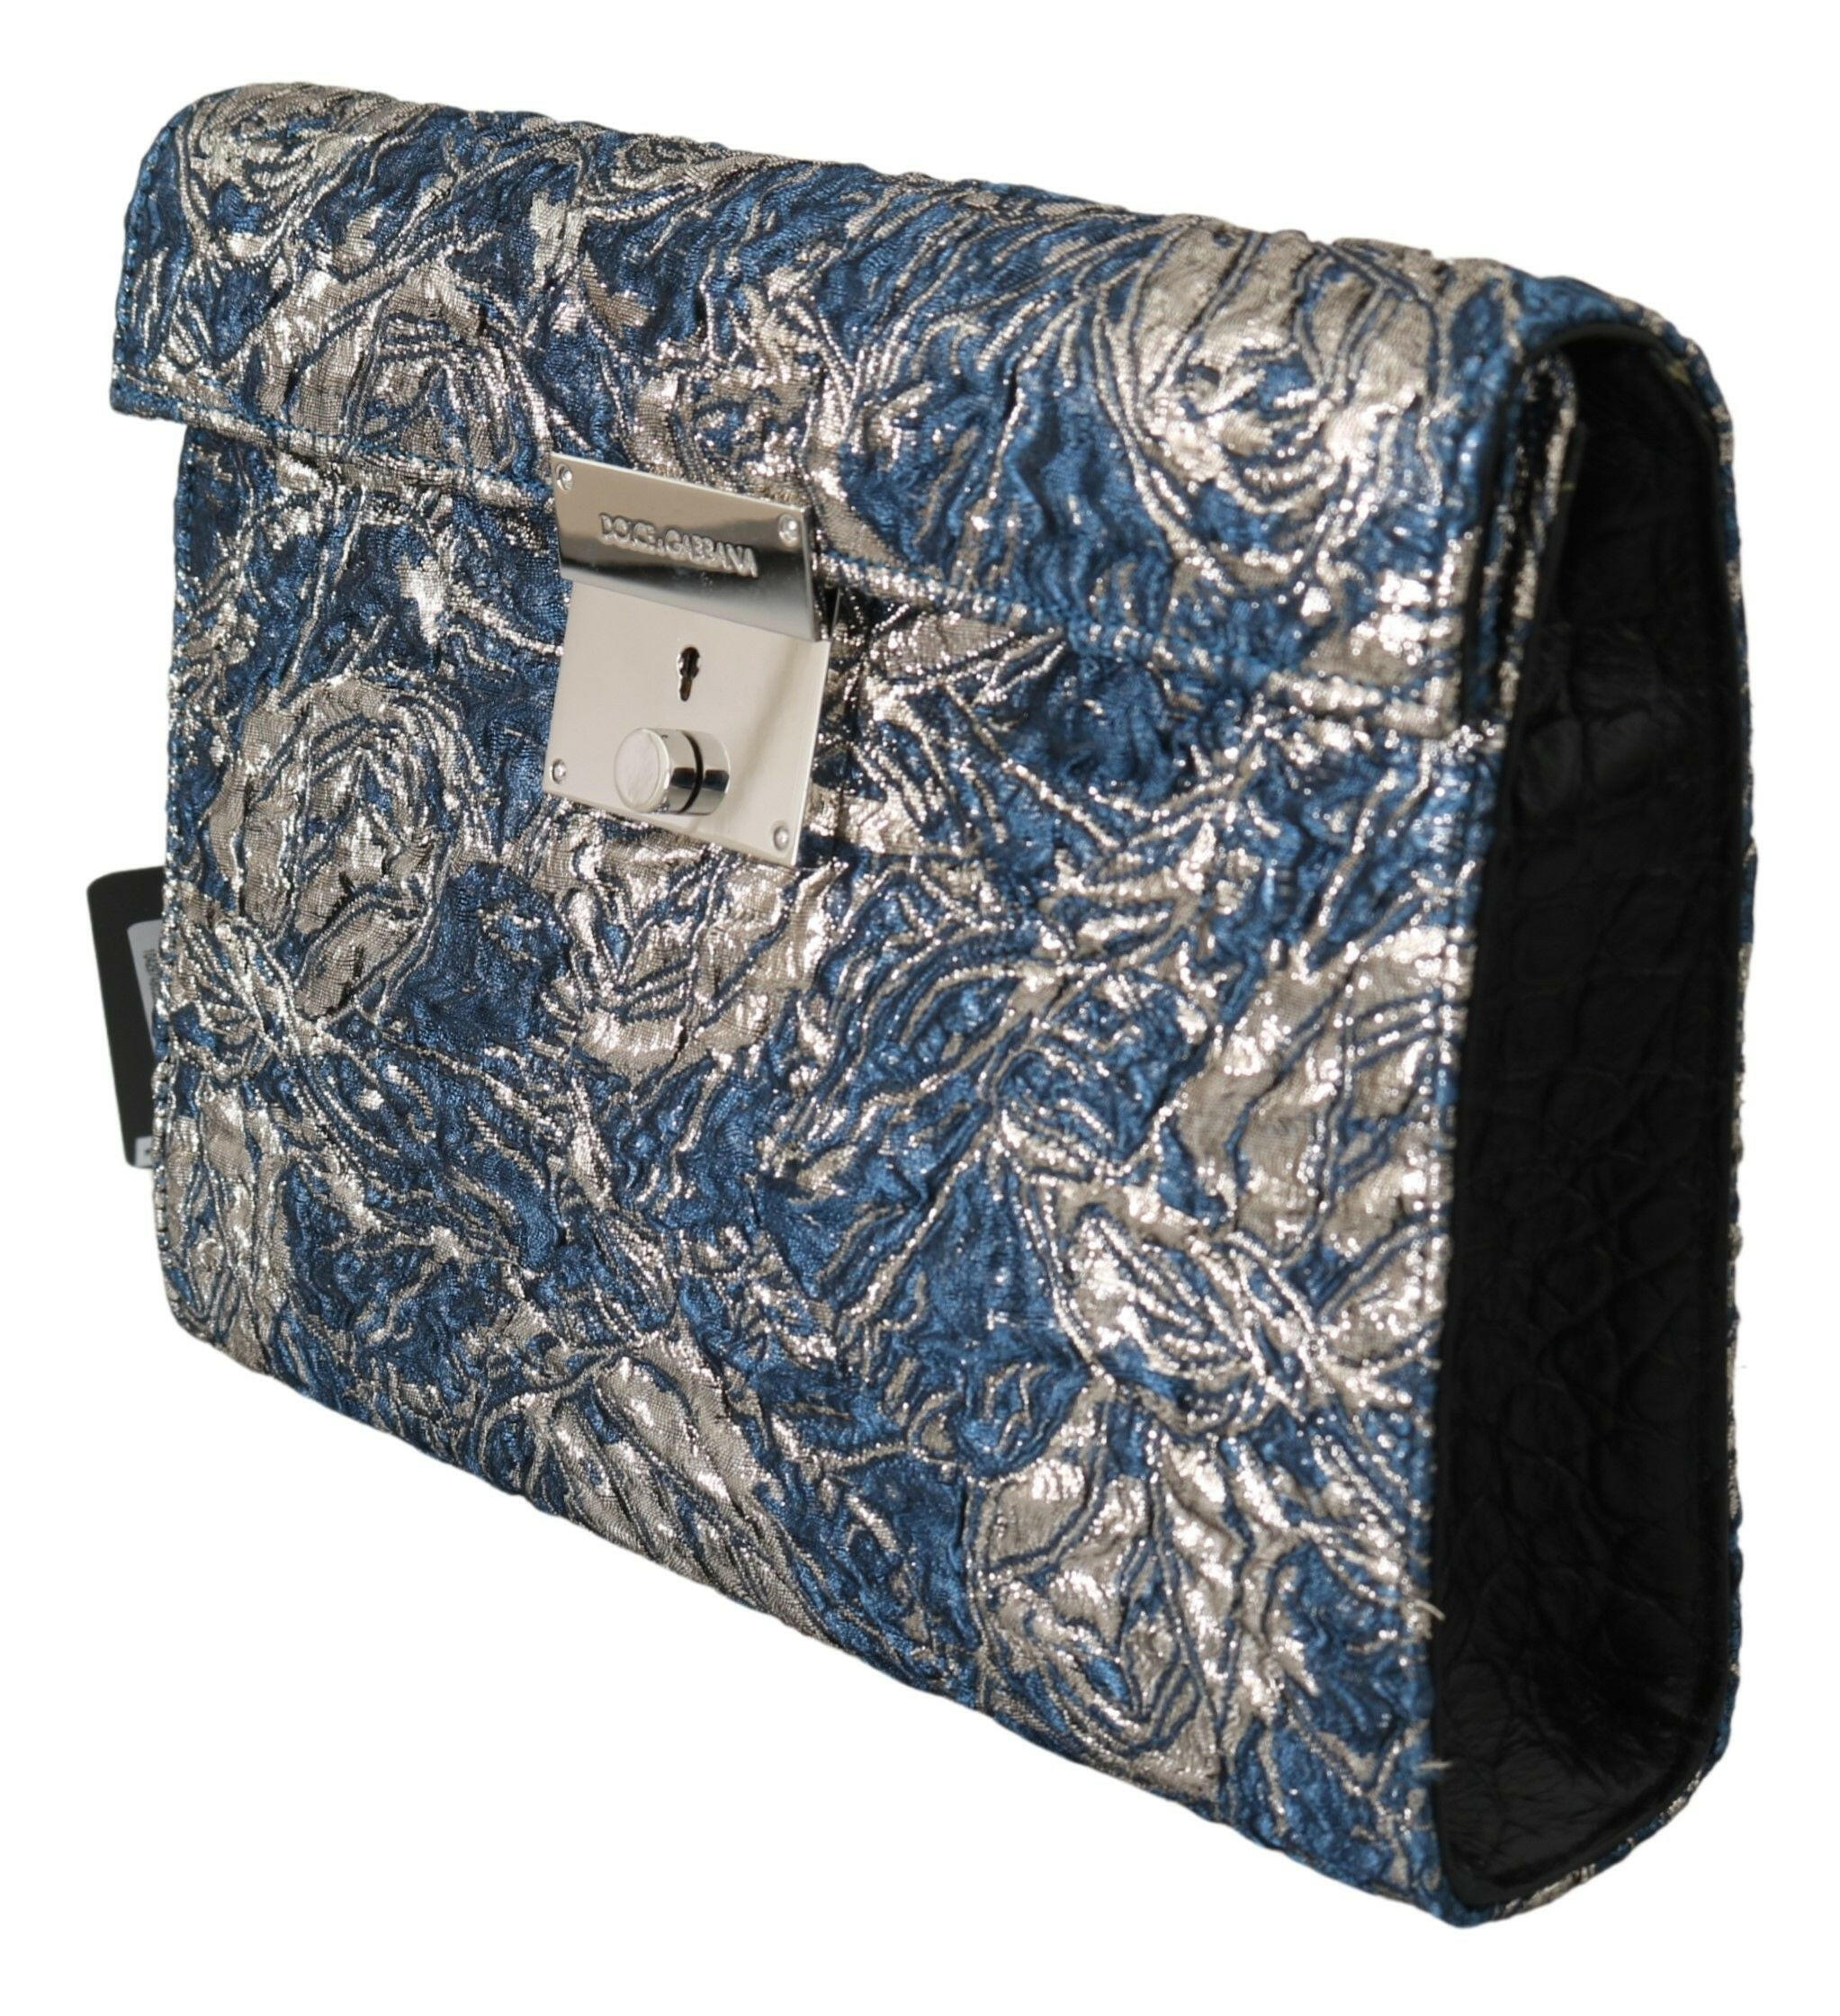 Dolce & Gabbana Blue Silver Jacquard Leather Document Briefcase Bag - GENUINE AUTHENTIC BRAND LLC  